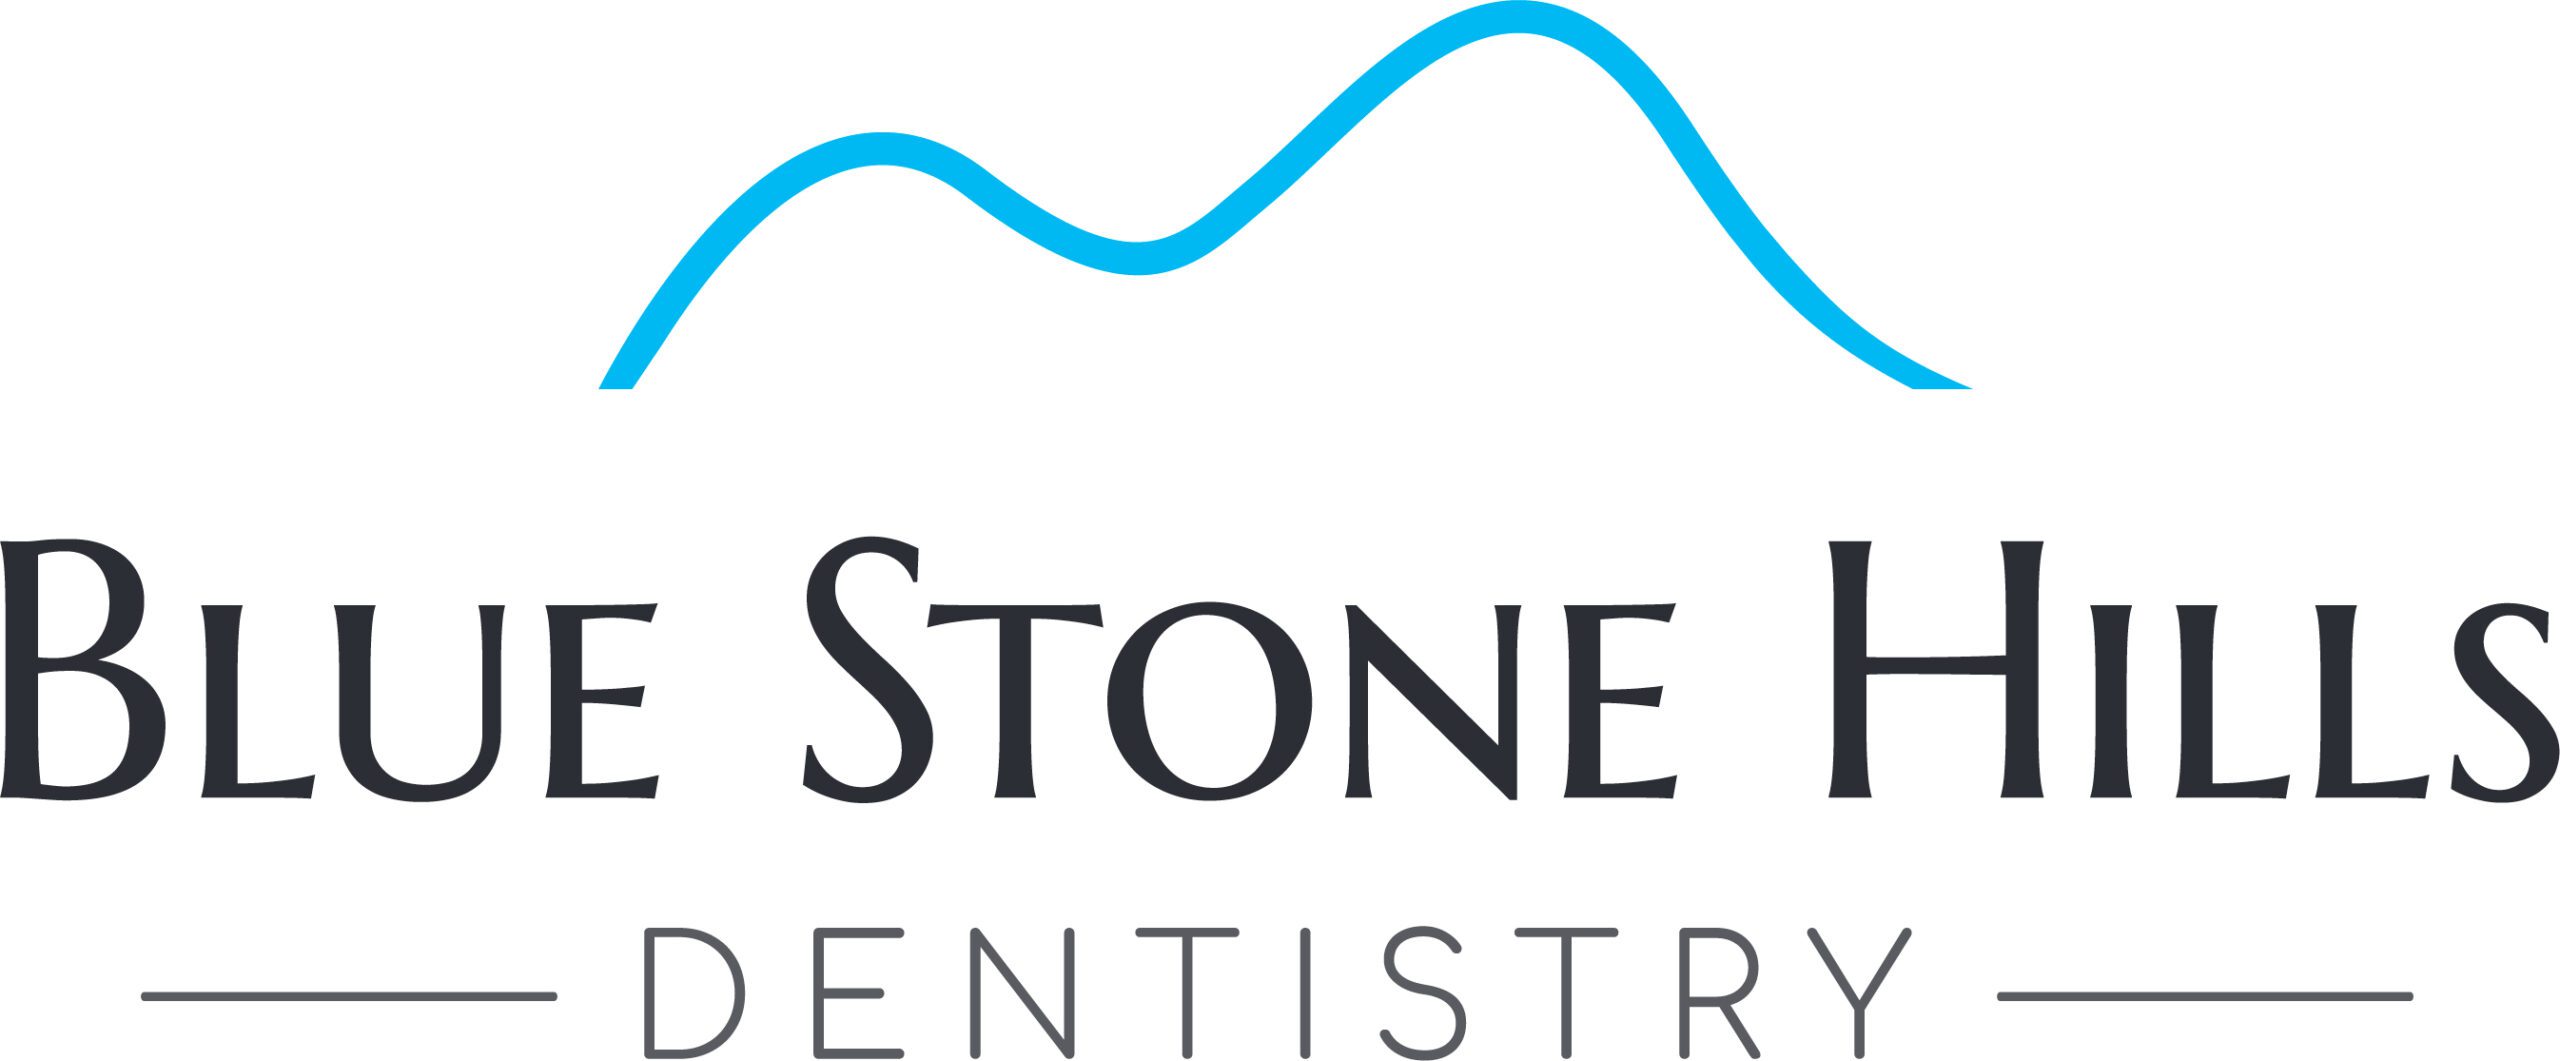 Blue Stone Hills Dentistry Logo - Your Dentist in Harrisonburg, VA